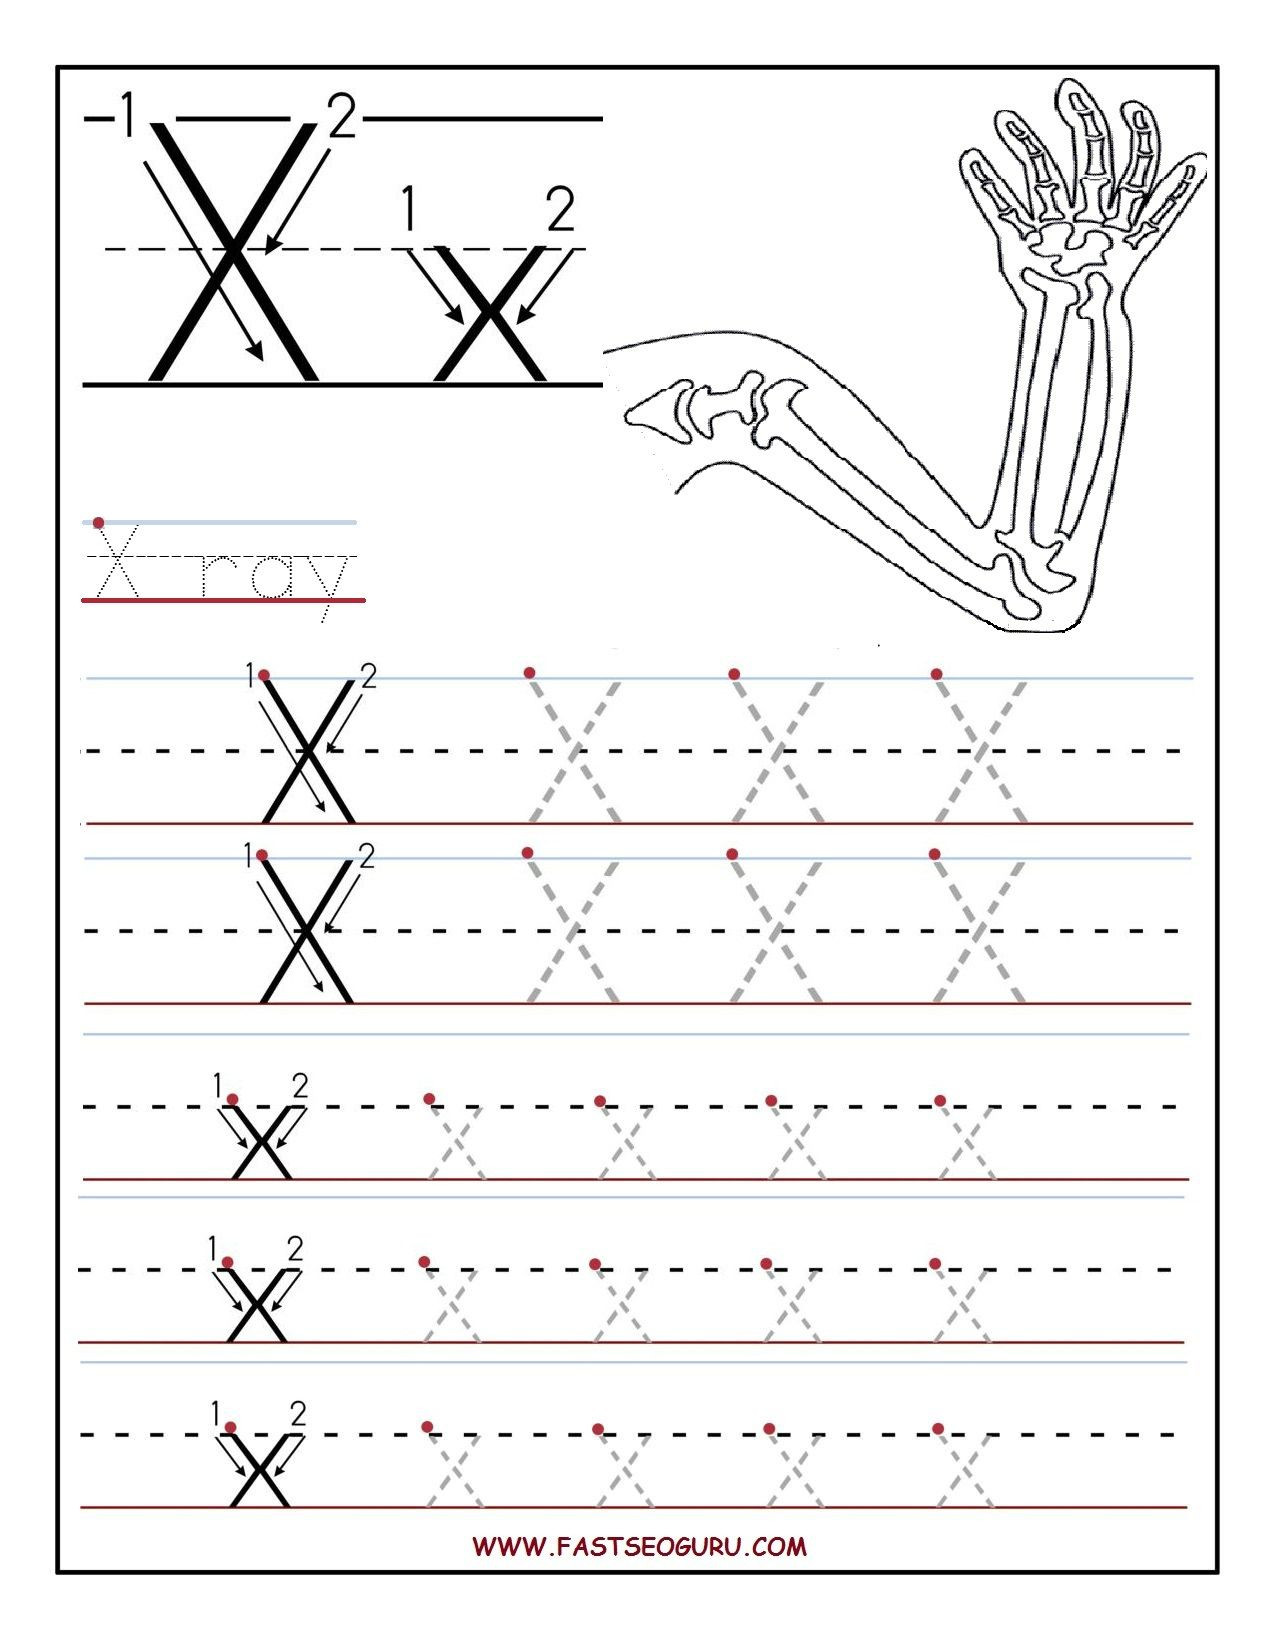 Letter X Worksheets for Preschool Letter X Worksheets Preschool Free